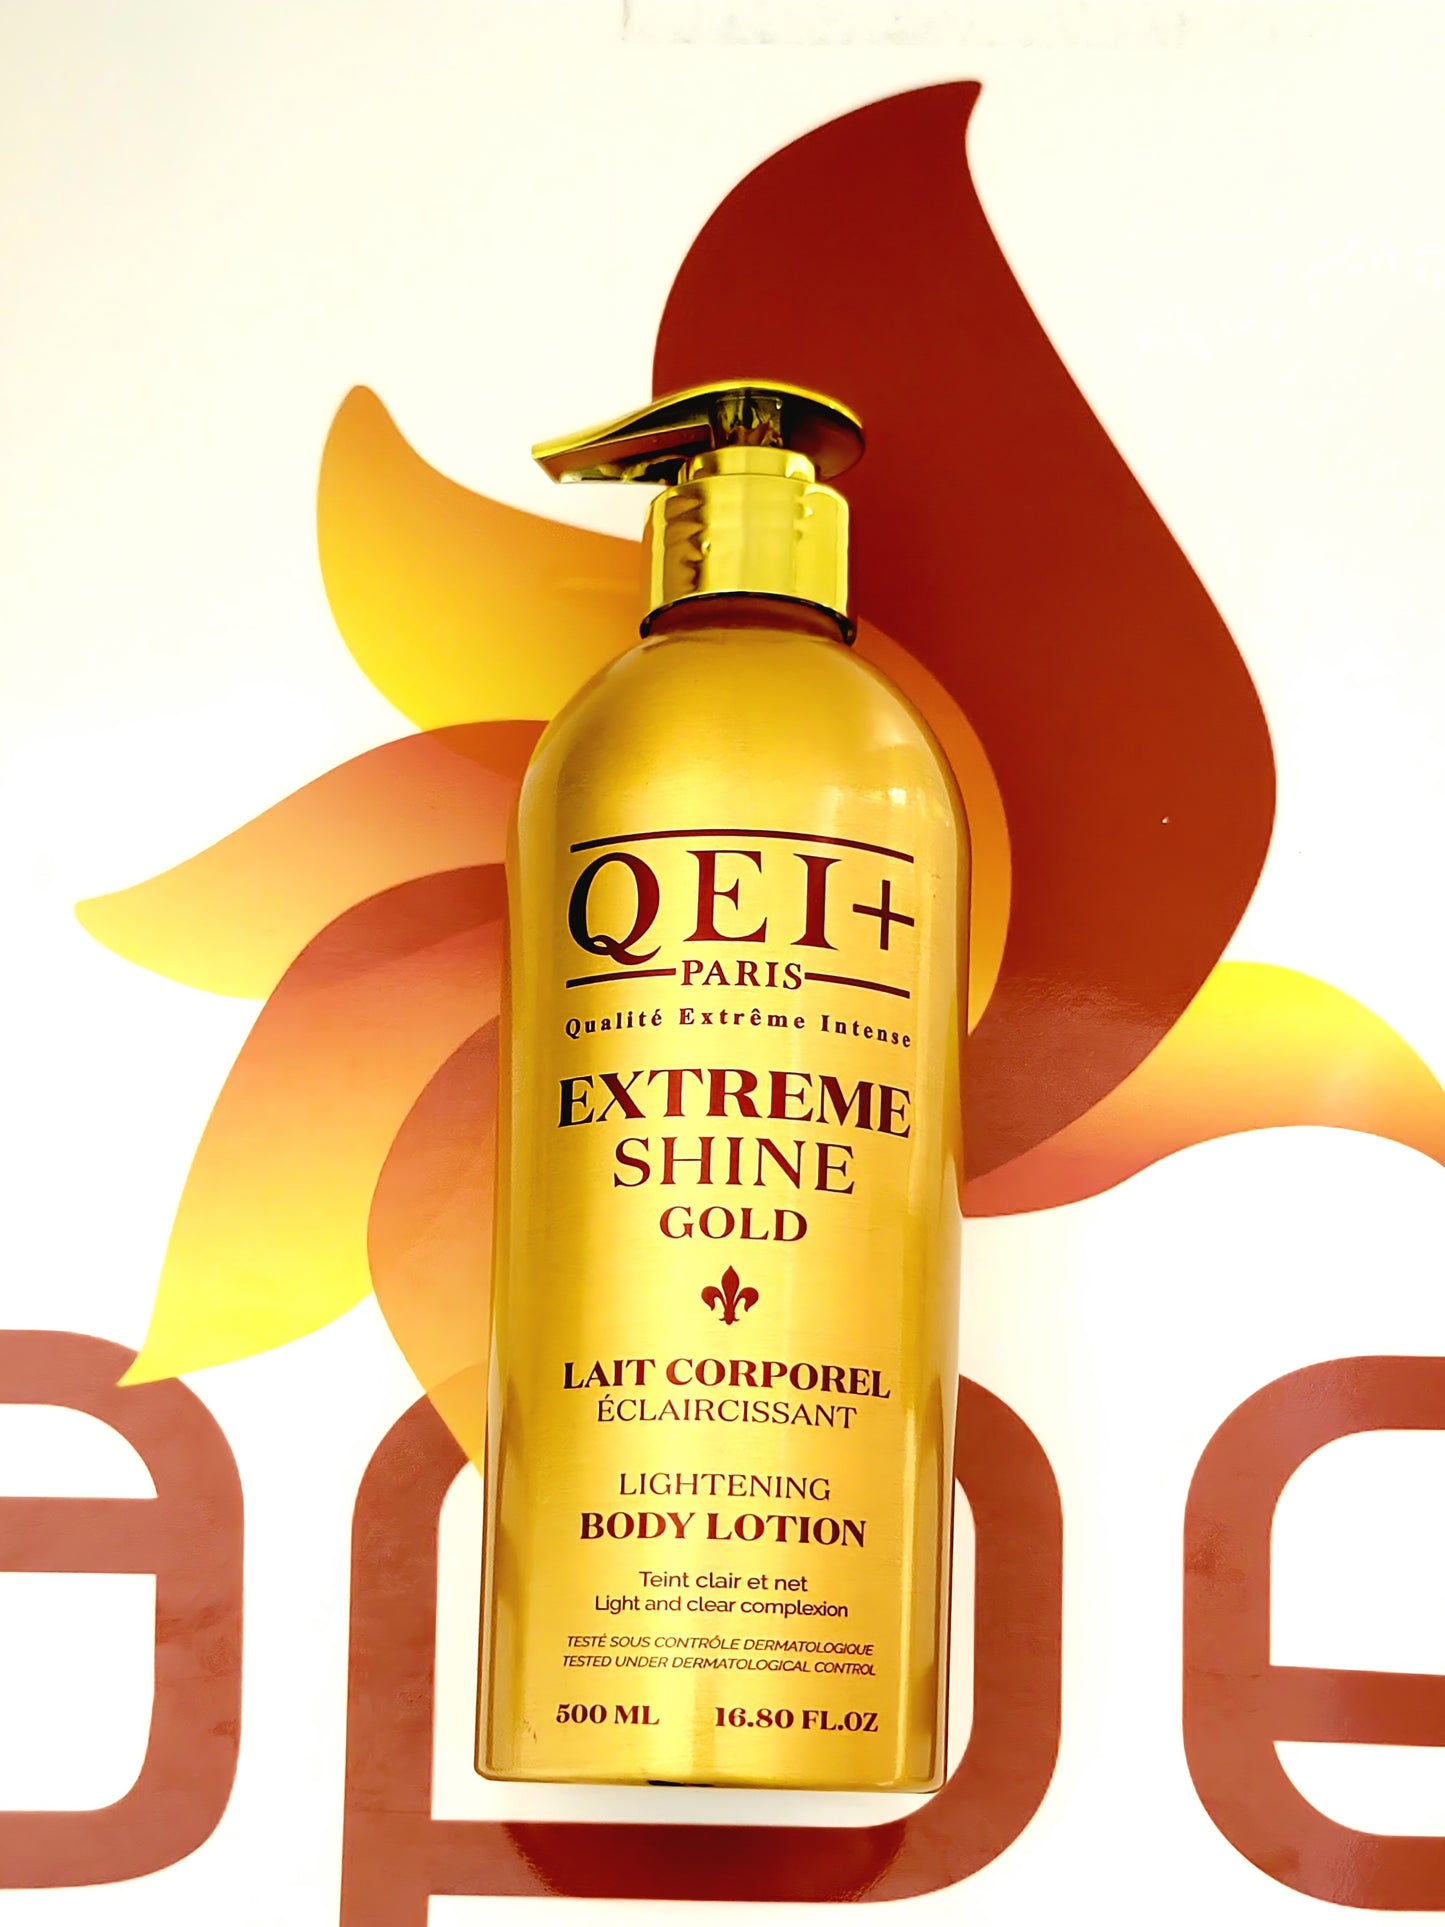 QEI+ Paris Extreme Shine Gold Lightening Body Lotion 500ml